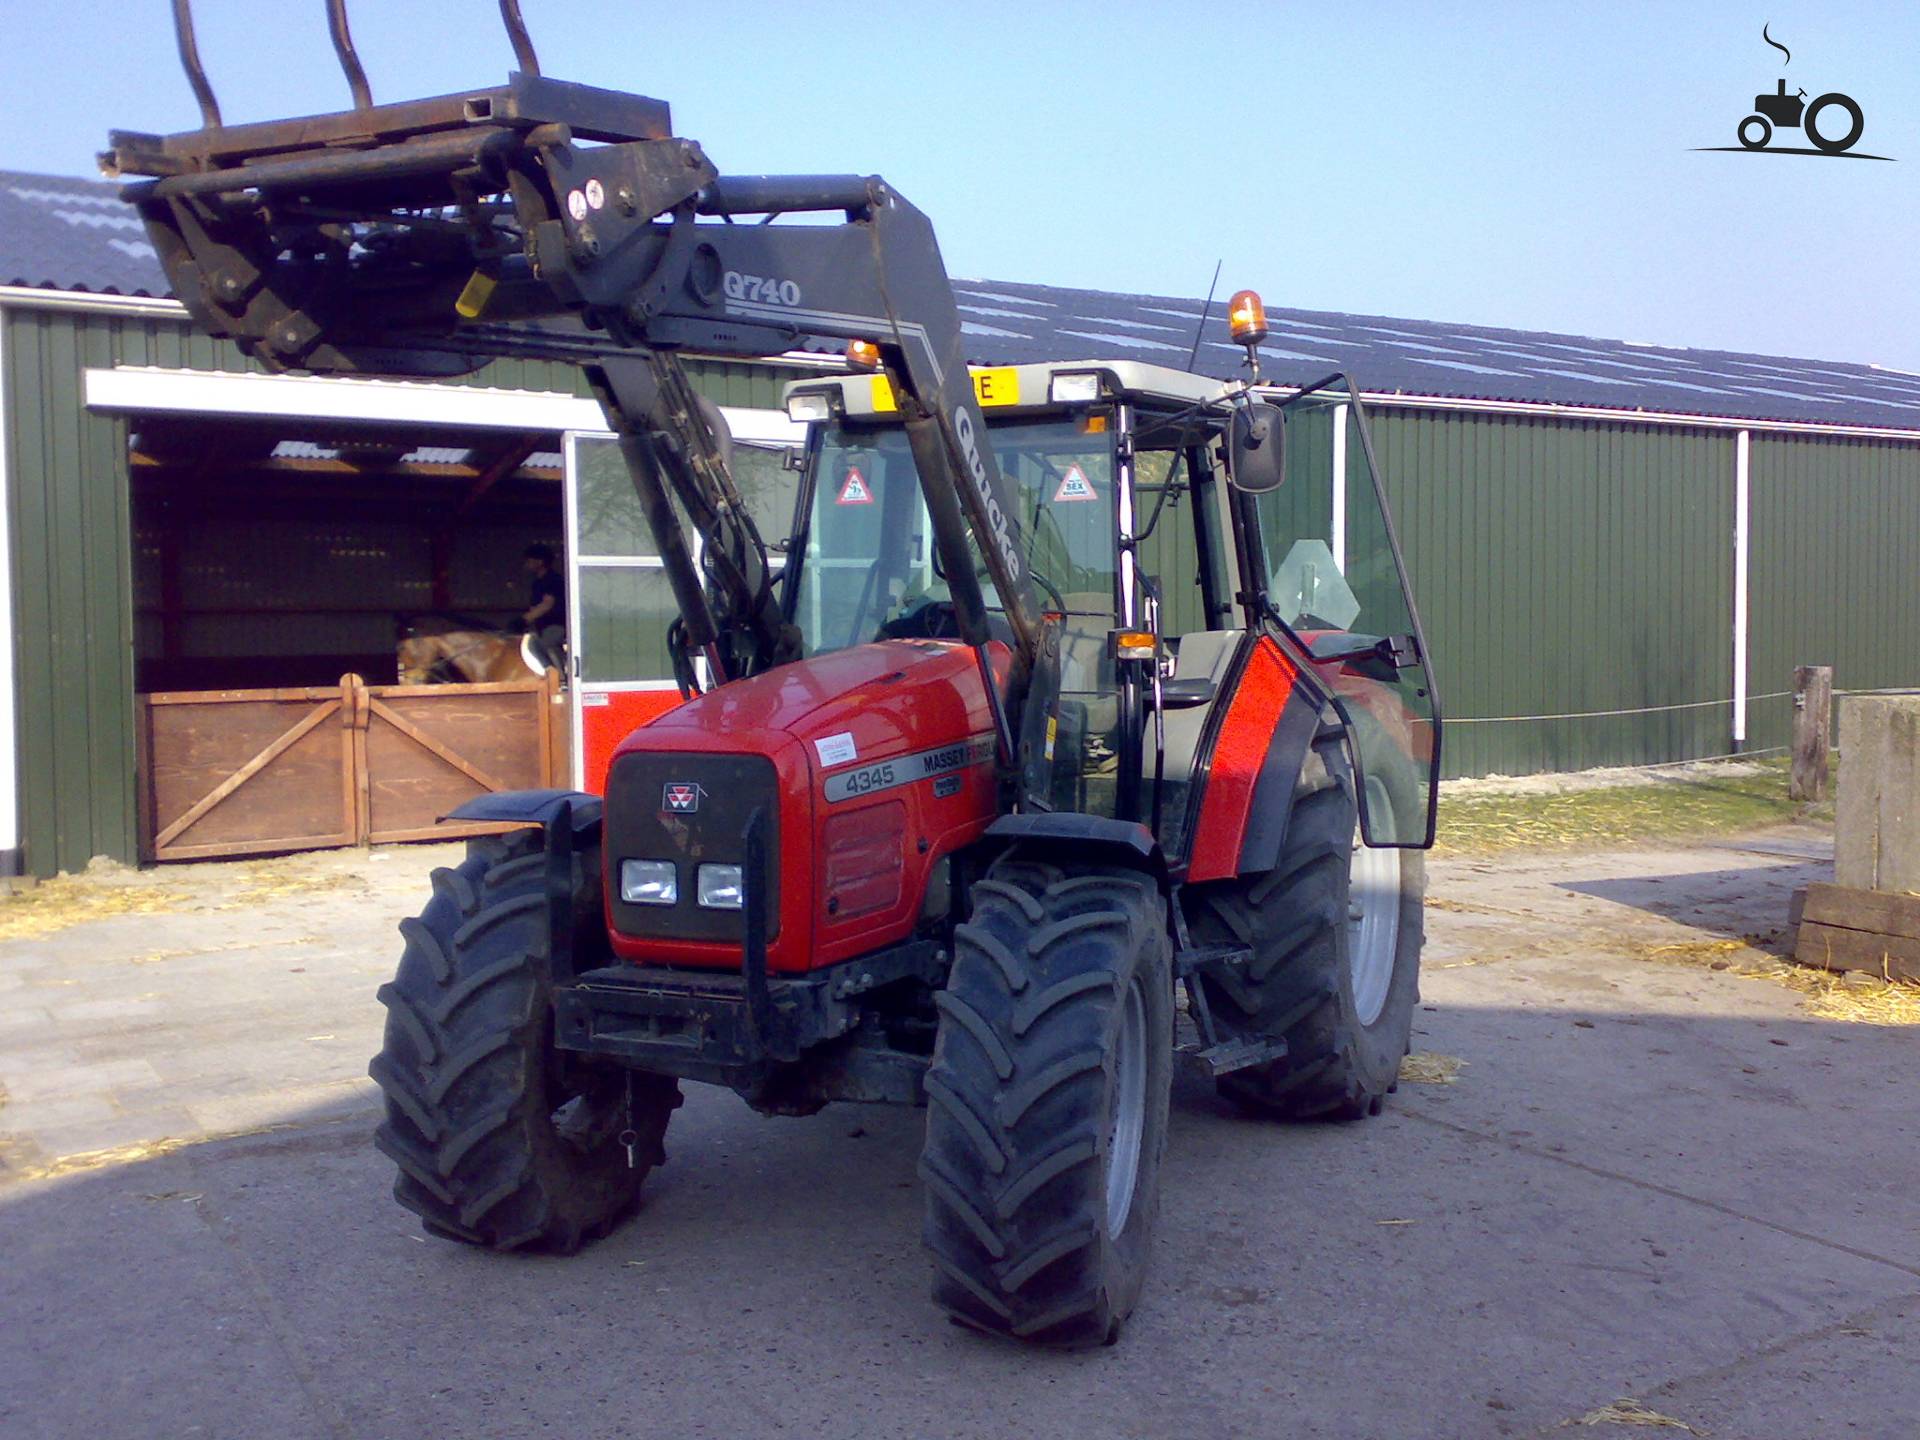 Massey Ferguson 4345 - United Kingdom - Tractor picture #44578
